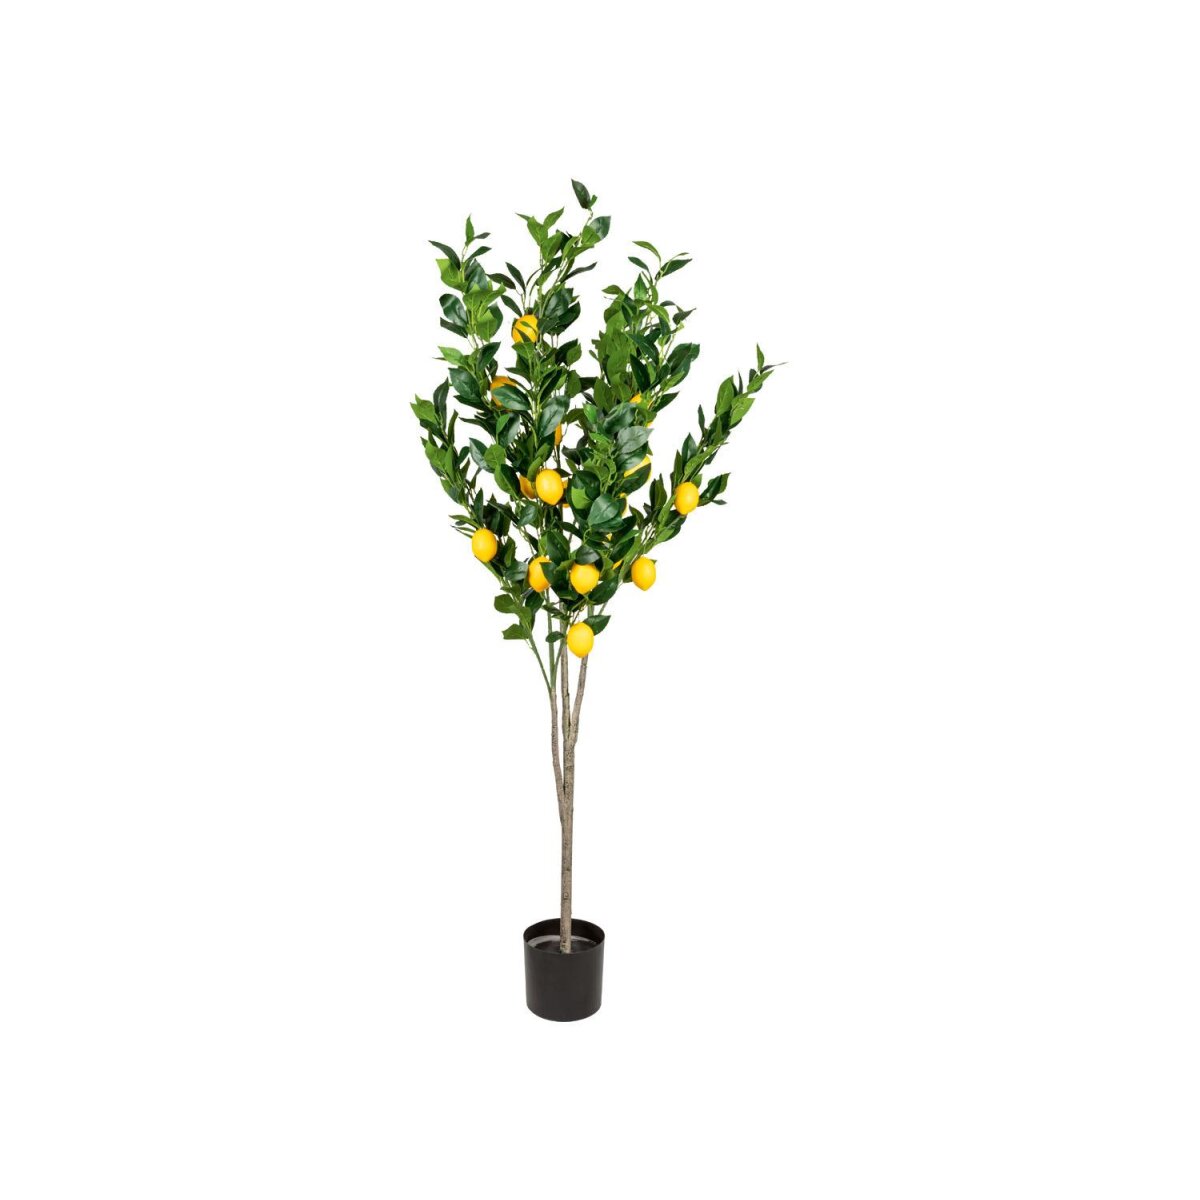 Livarno home Kunstpflanze Zitronenbaum, 1,6 m - B-Ware sehr gut, 50,99 €